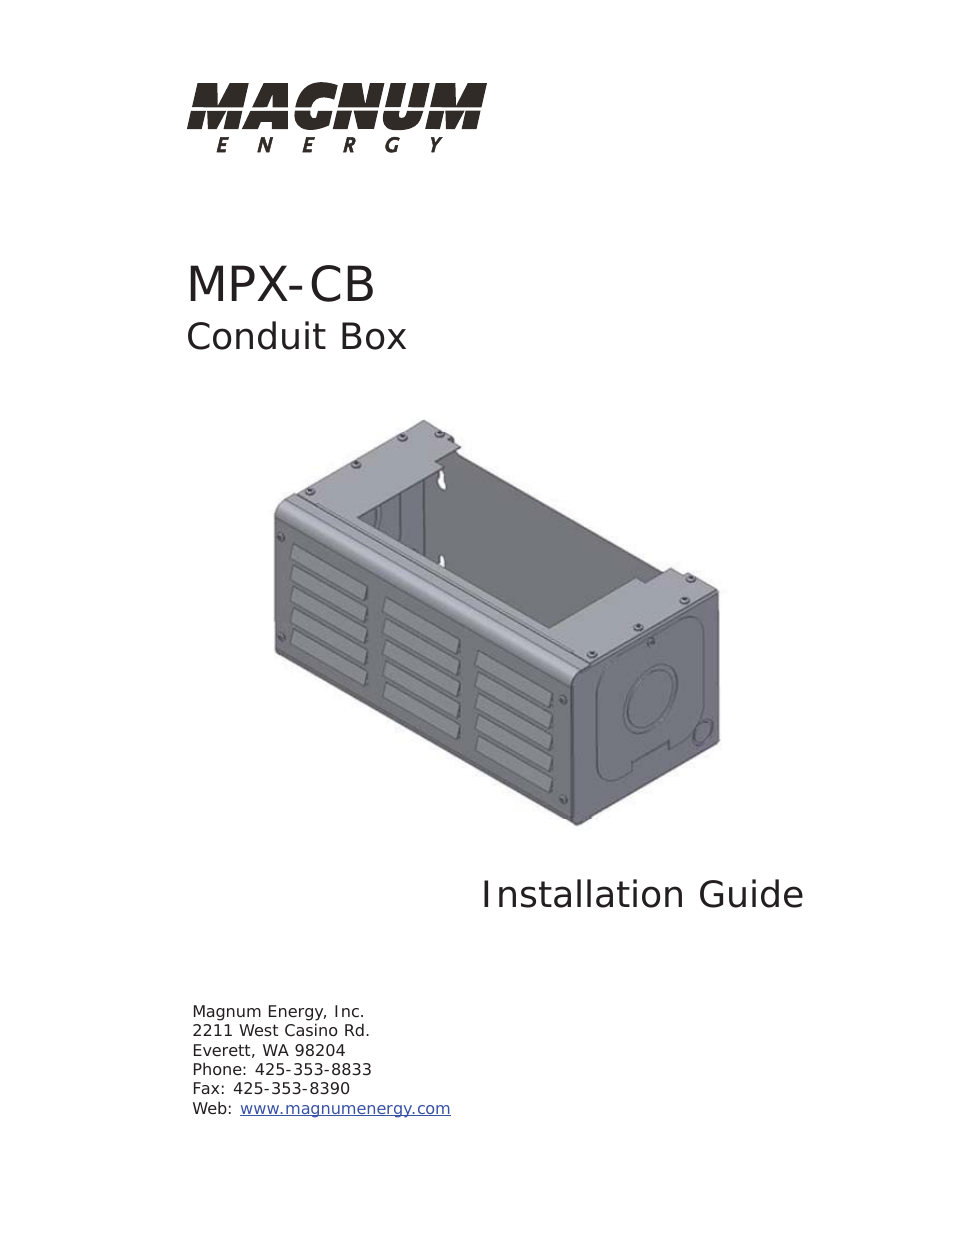 MP Conduit Box/Enclosure (MPX-CB)